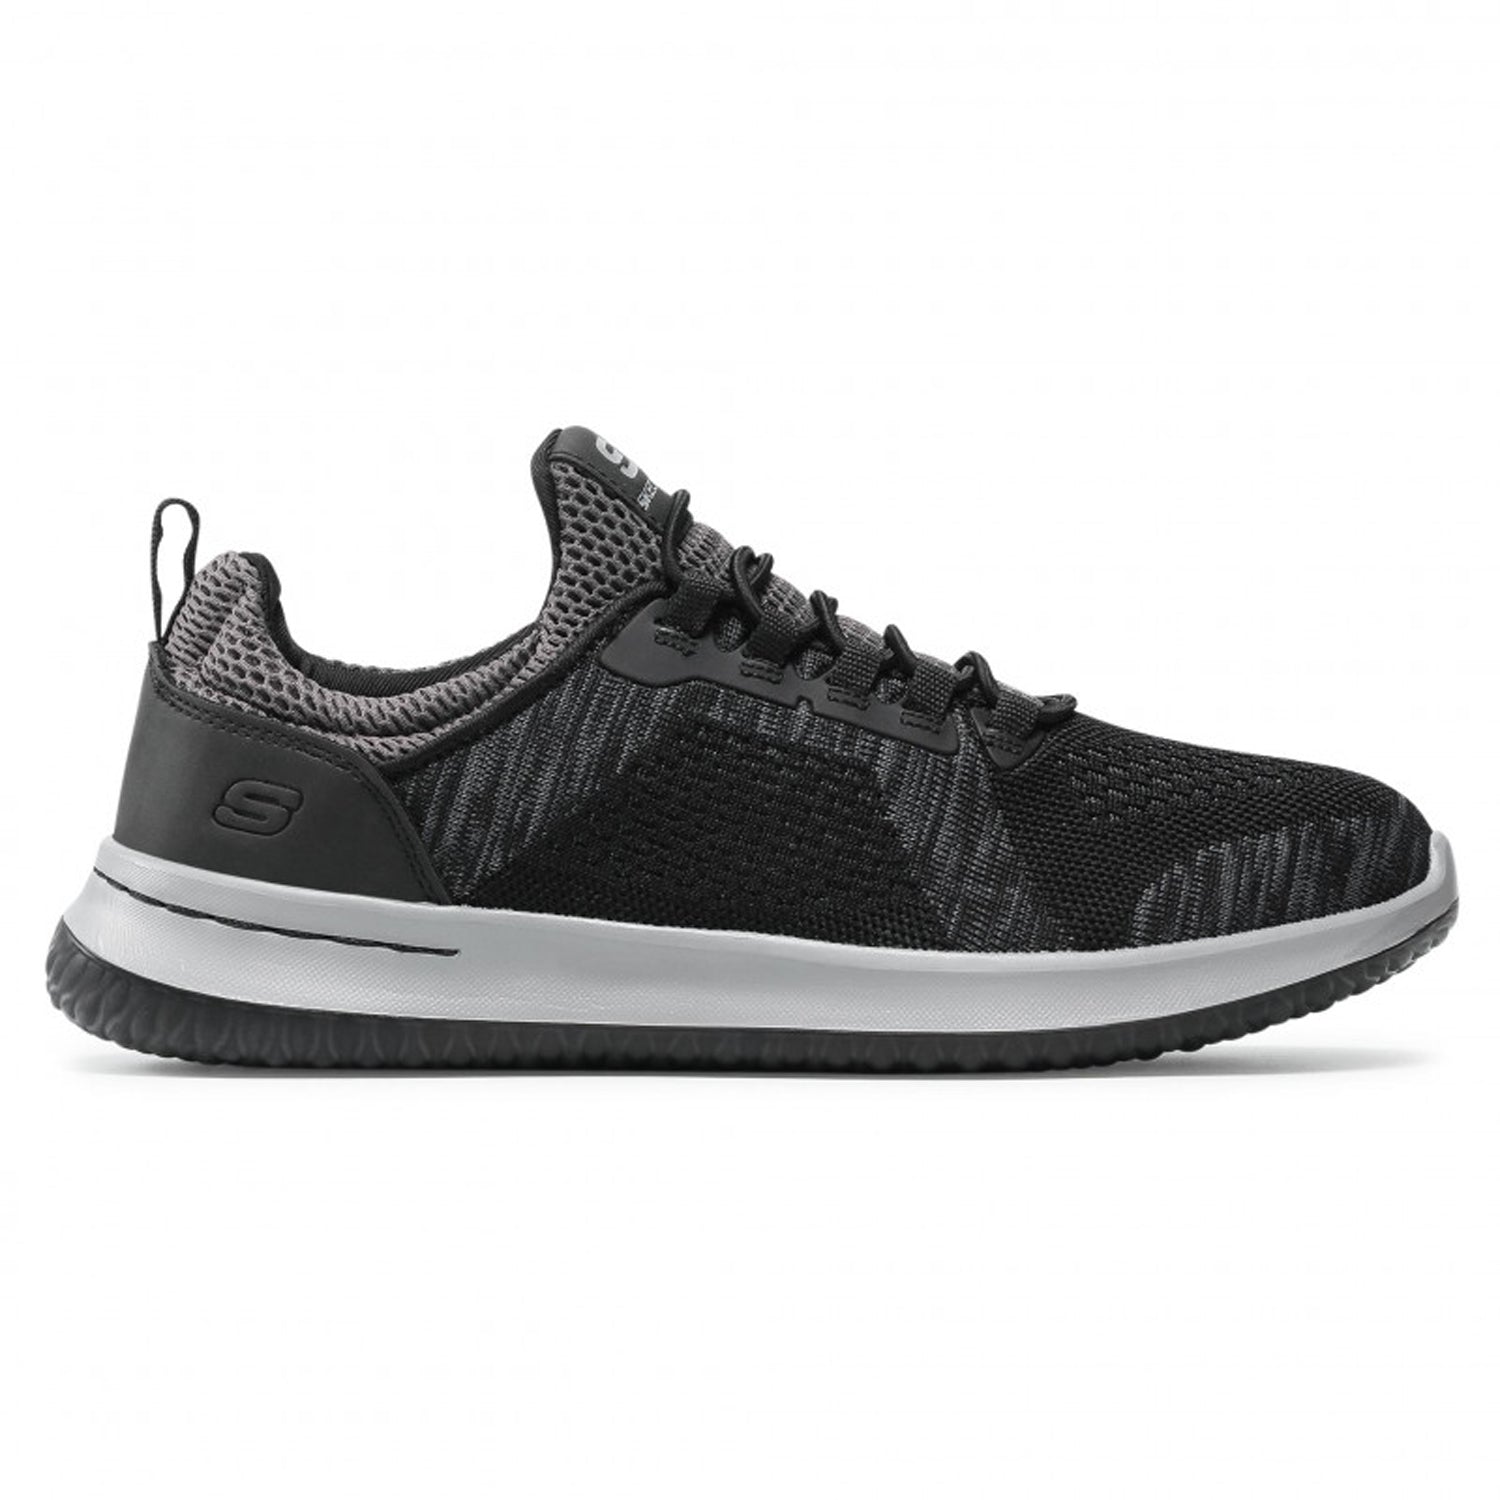 Skechers Men's Delson-Brewton Running Shoes, Black/Charcoal – Prokicksports